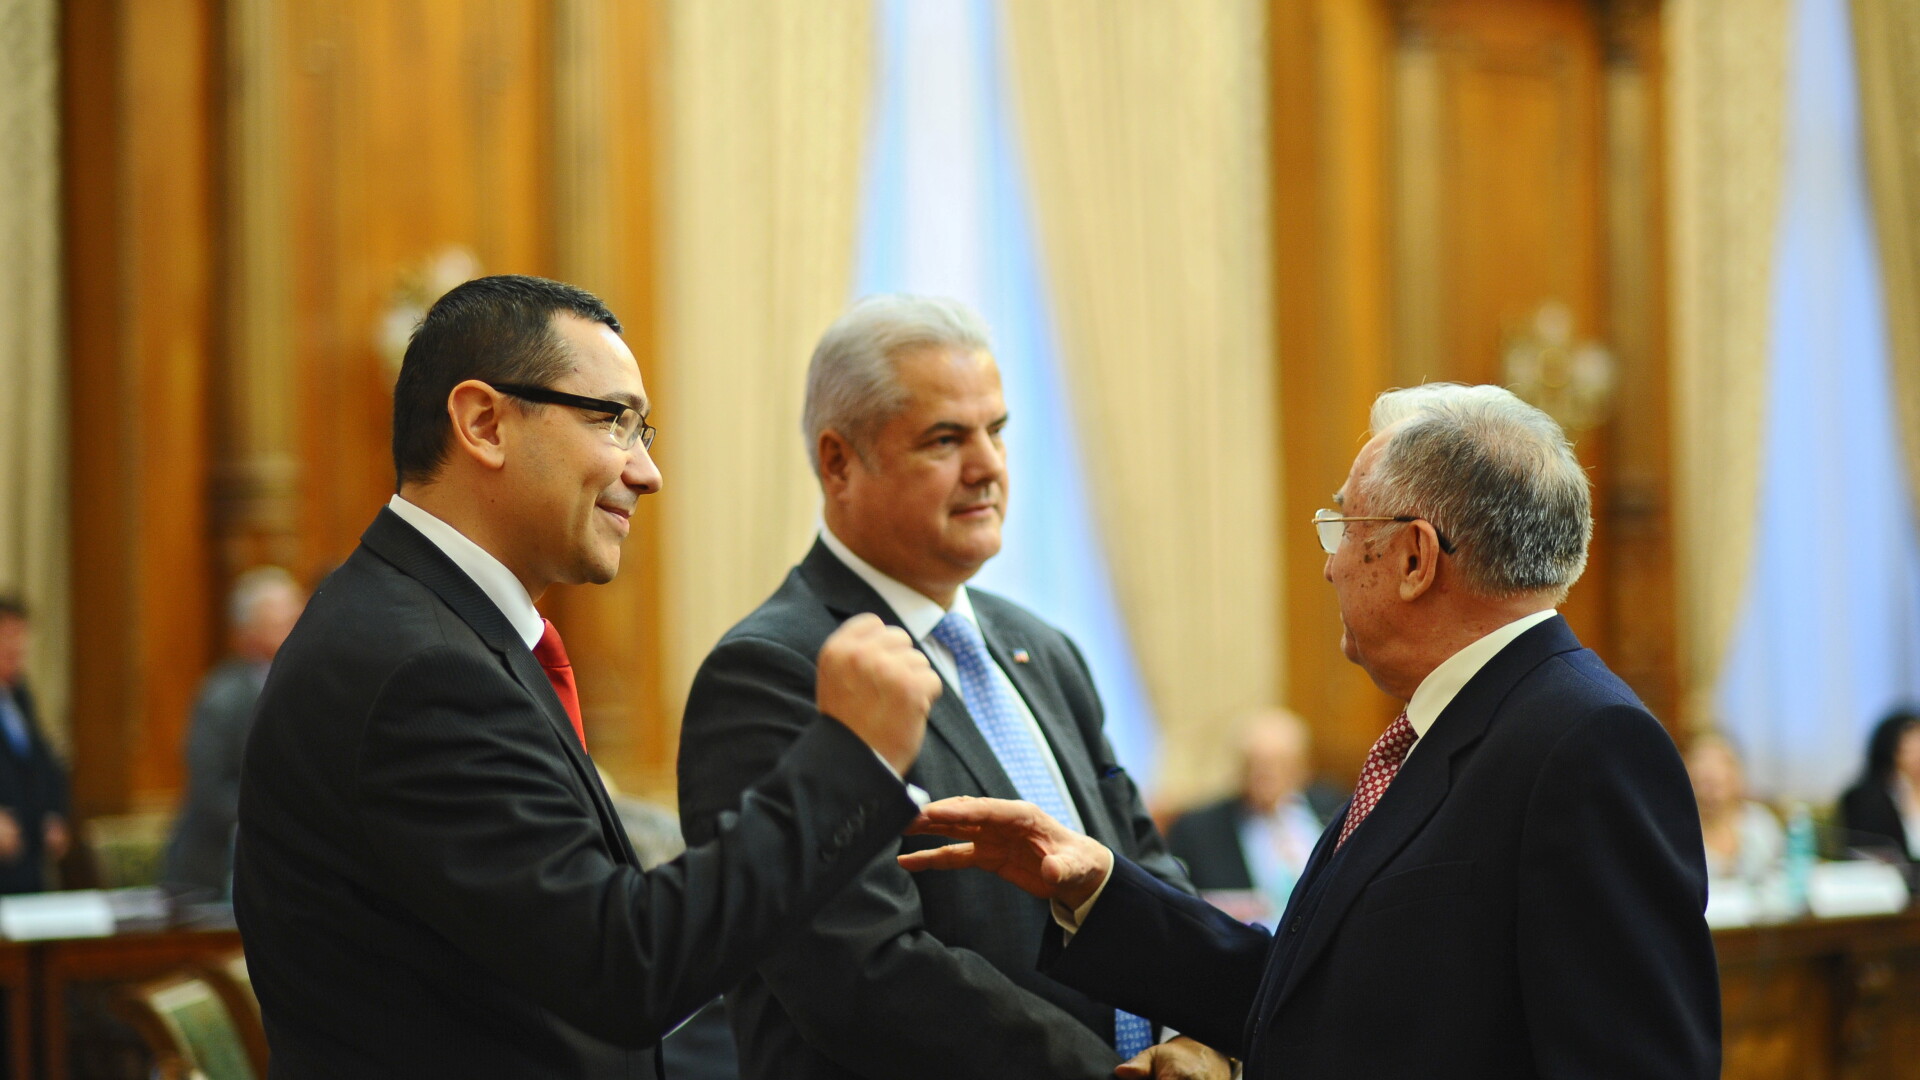 Victor Ponta, Ion Iliescu si Adrian Nastase